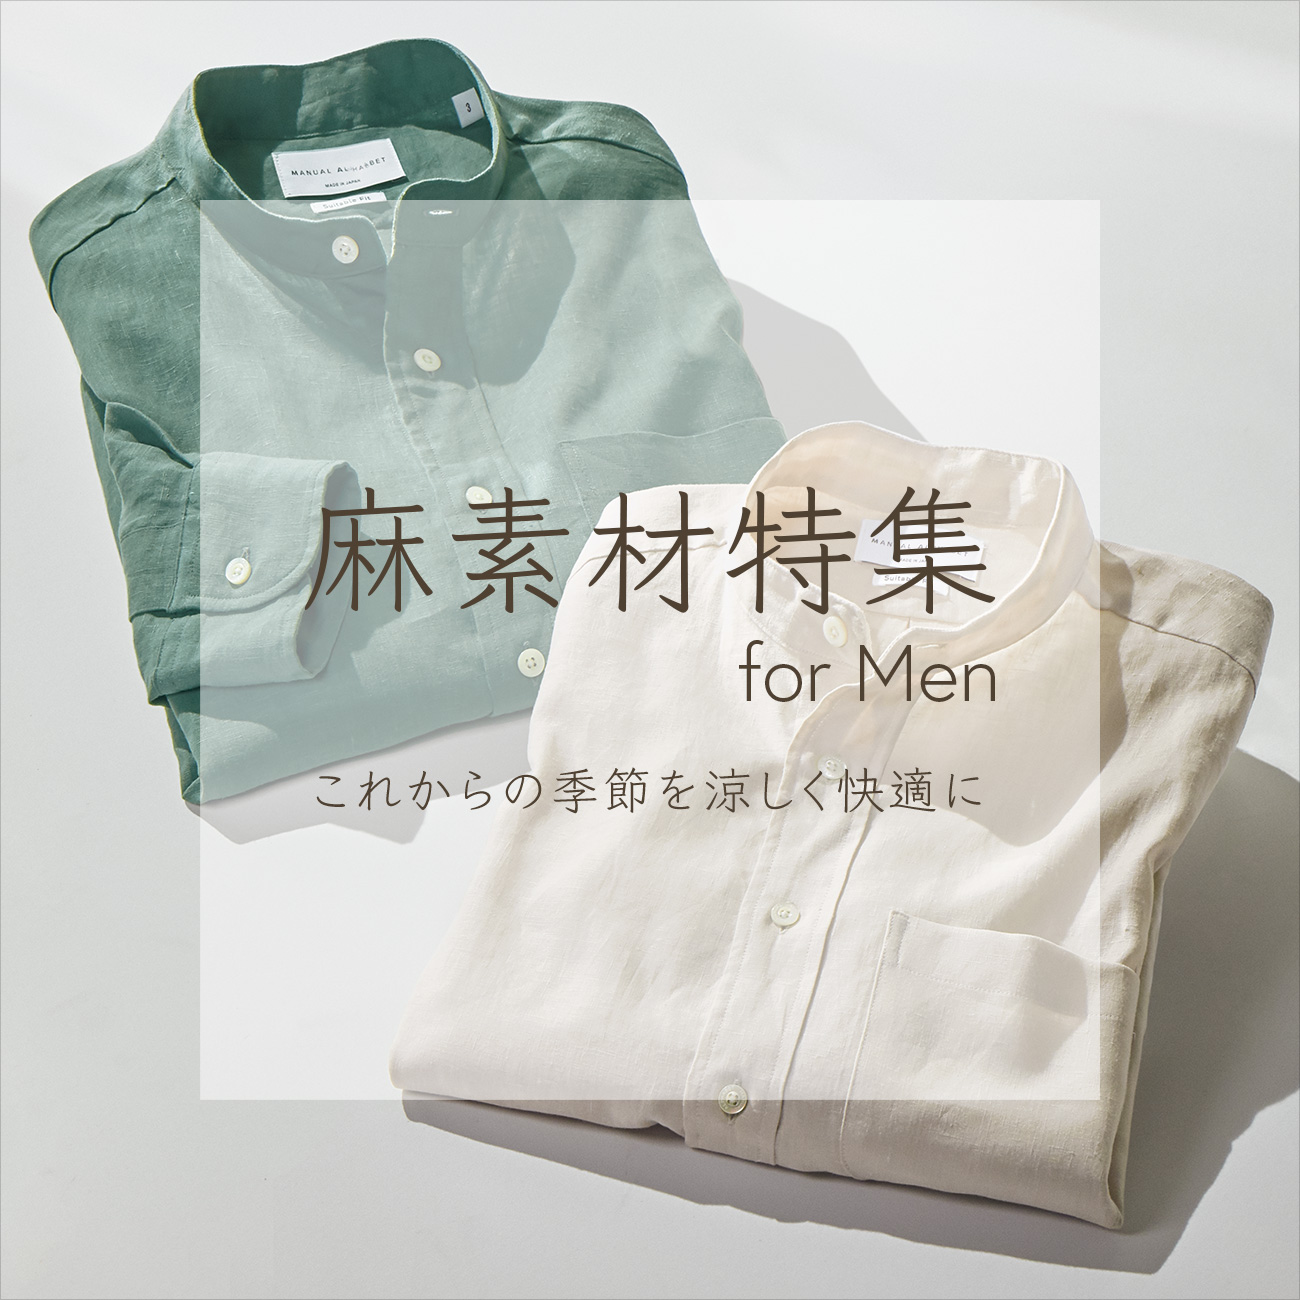 【特集】麻素材特集 for Men